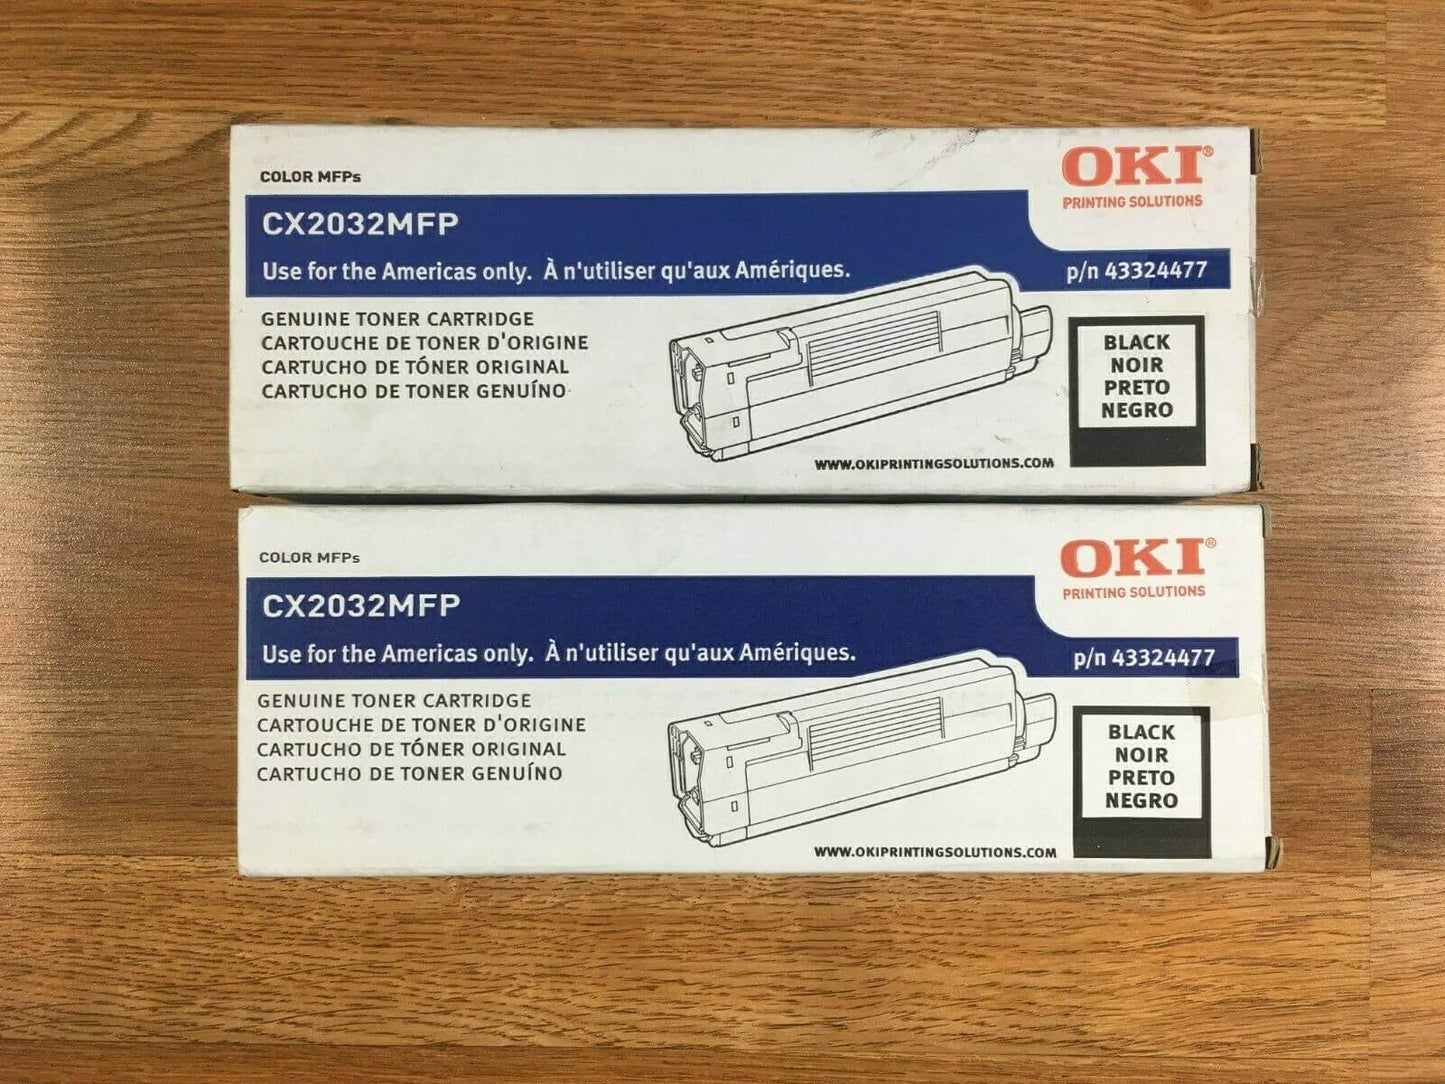 Lot Of 2 Genuine Oki Black Toner Cartridge CX2032MFP FedEx 2Day Air!! - copier-clearance-center